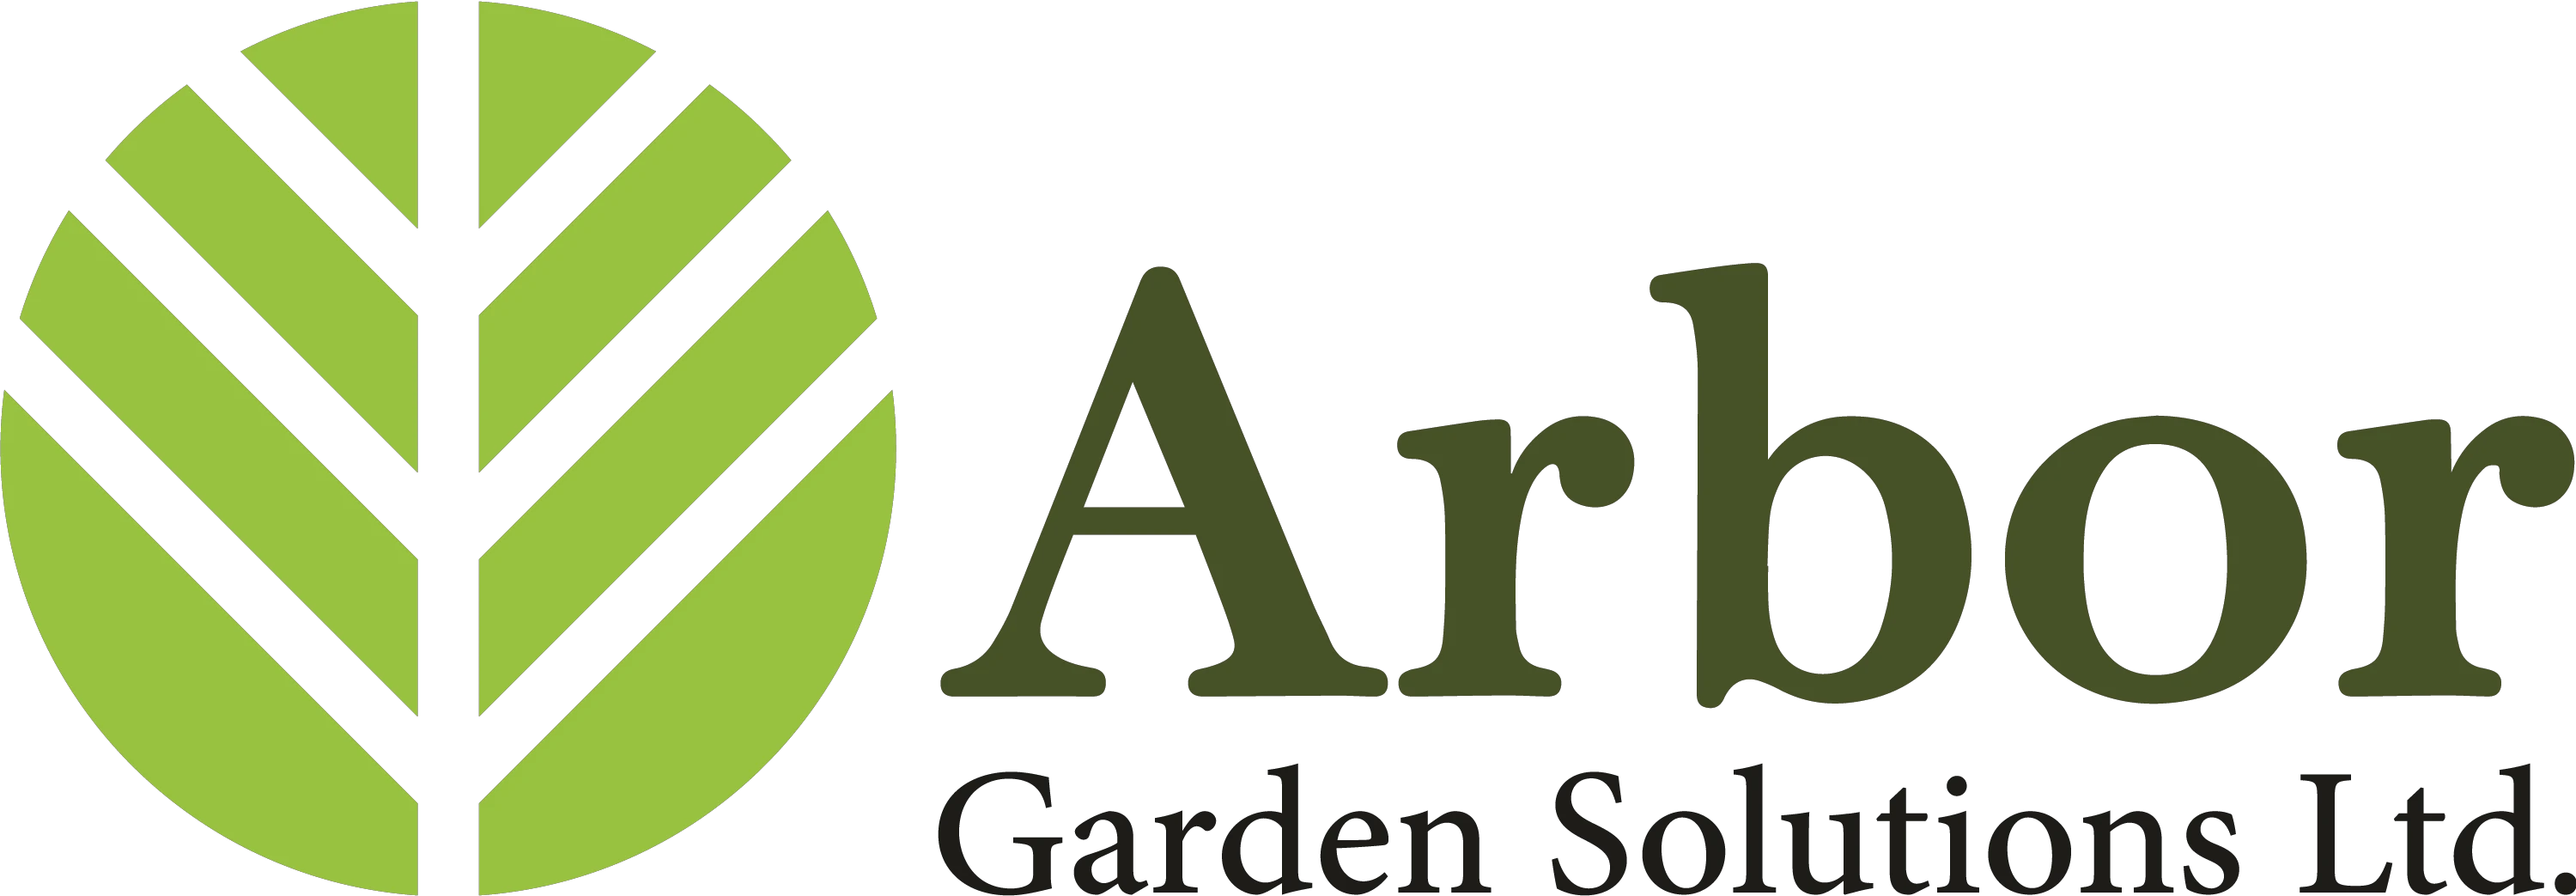 Arbor Garden Solutions Discount Codes & Voucher Codes